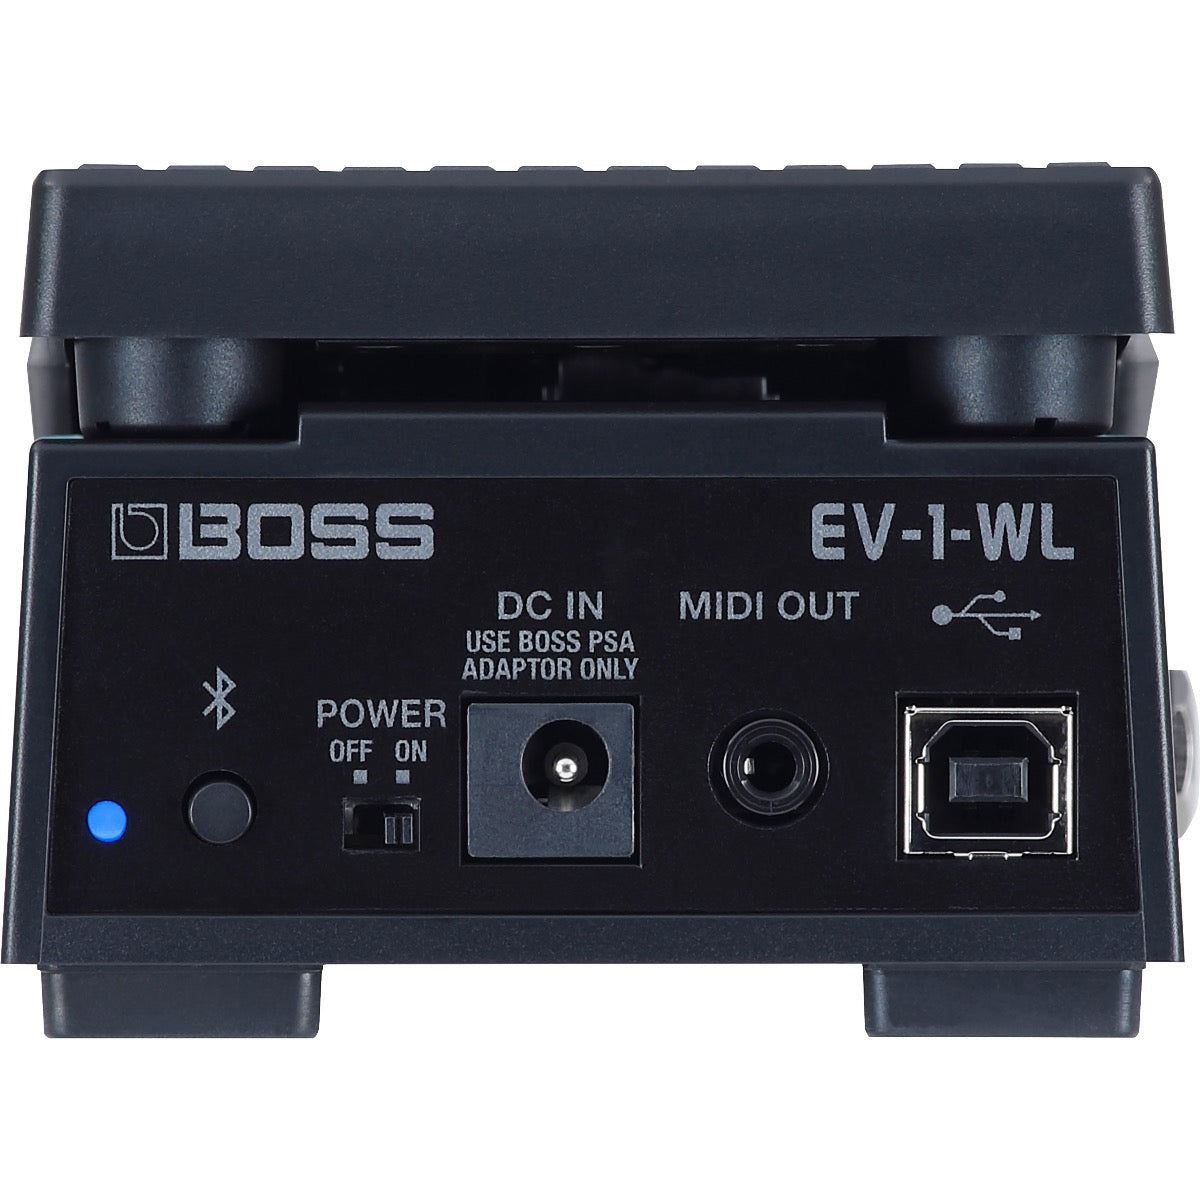 Rear view of Boss EV-1-WL Wireless MIDI Expression Pedal